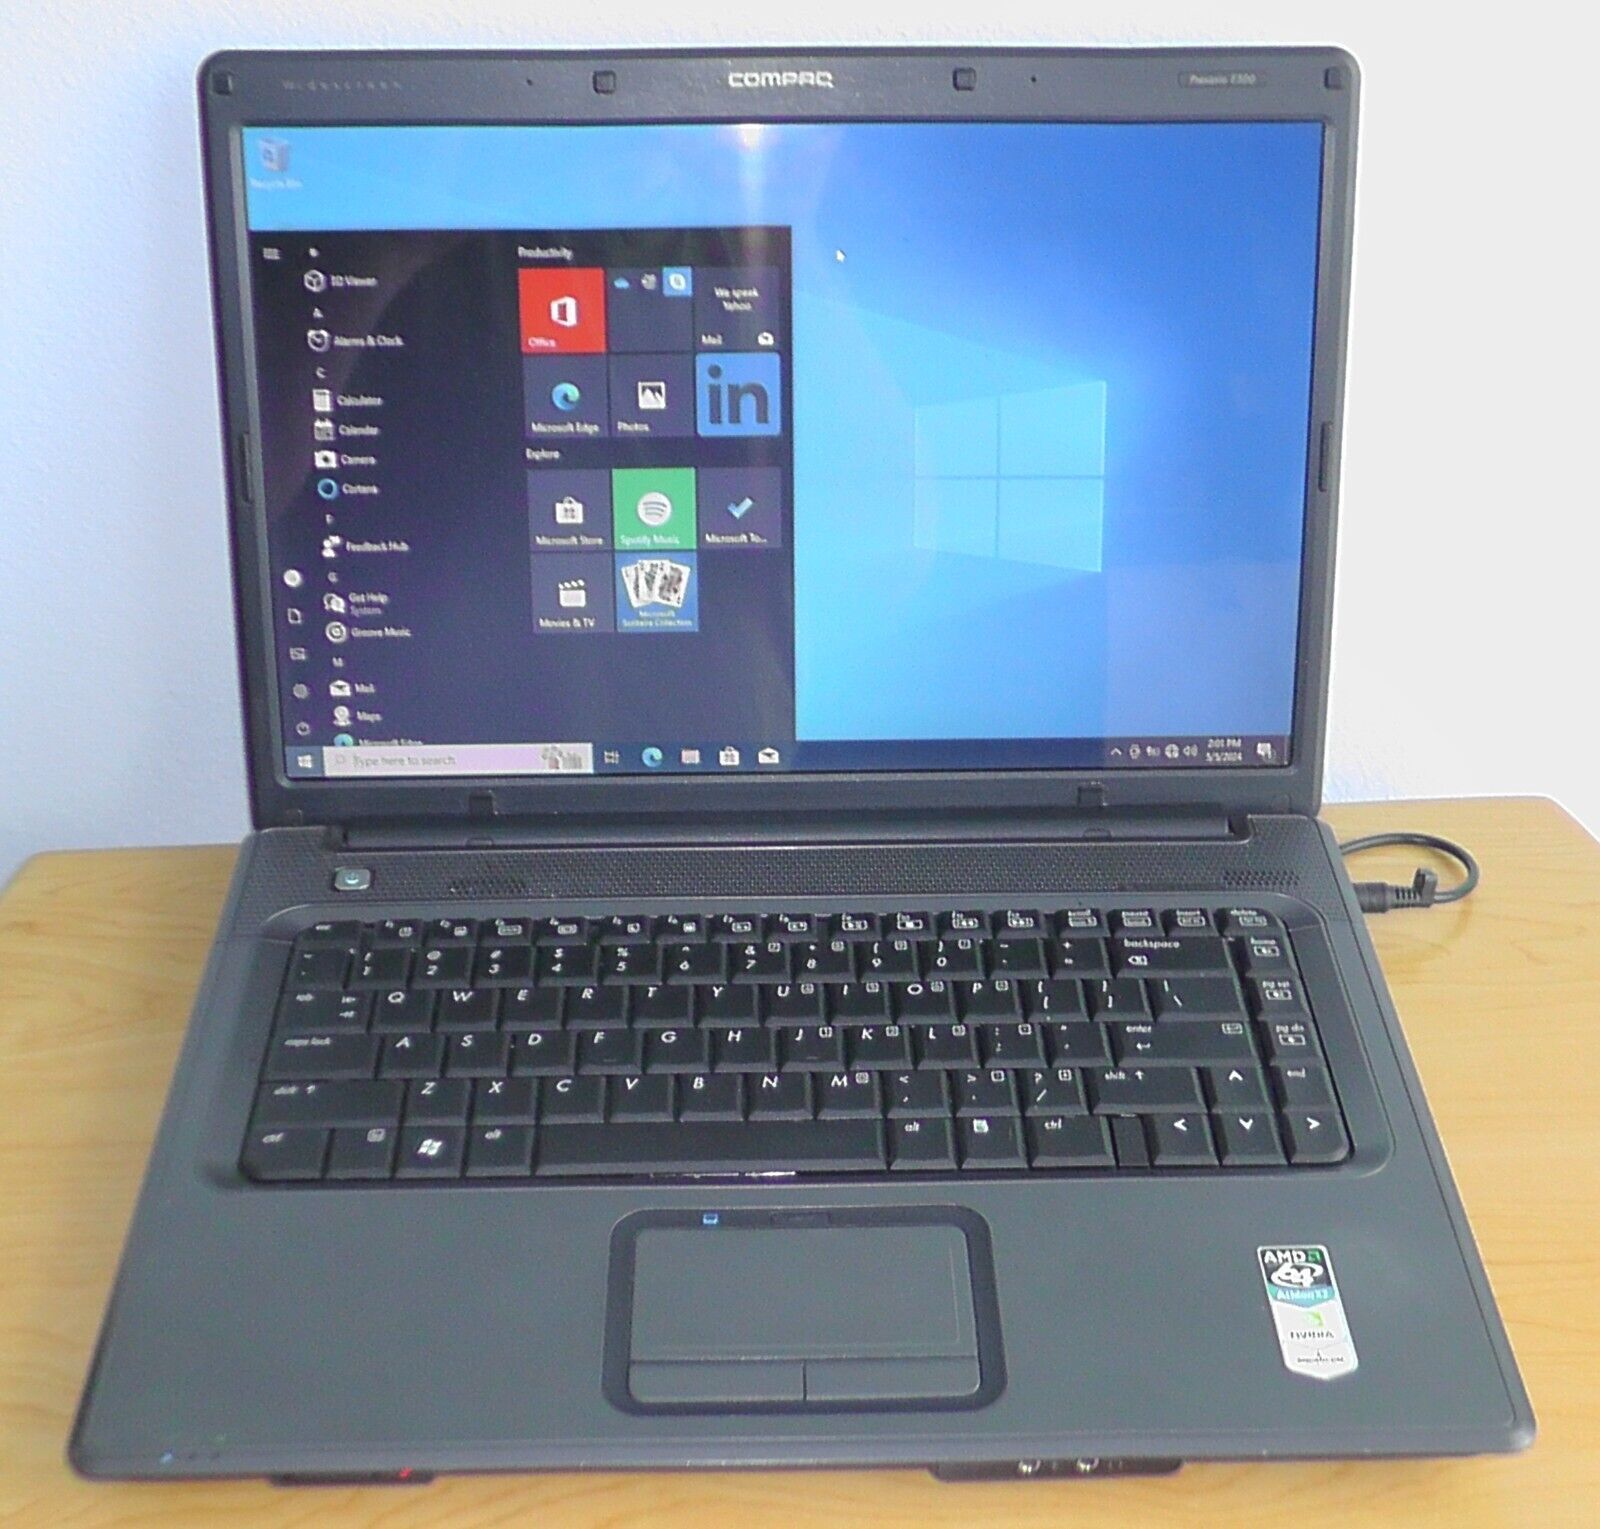 HP Presario F500 Laptop 1.7GHz, 4 GB RAM, 240GB SSD, Windows 10 64, parts/repair